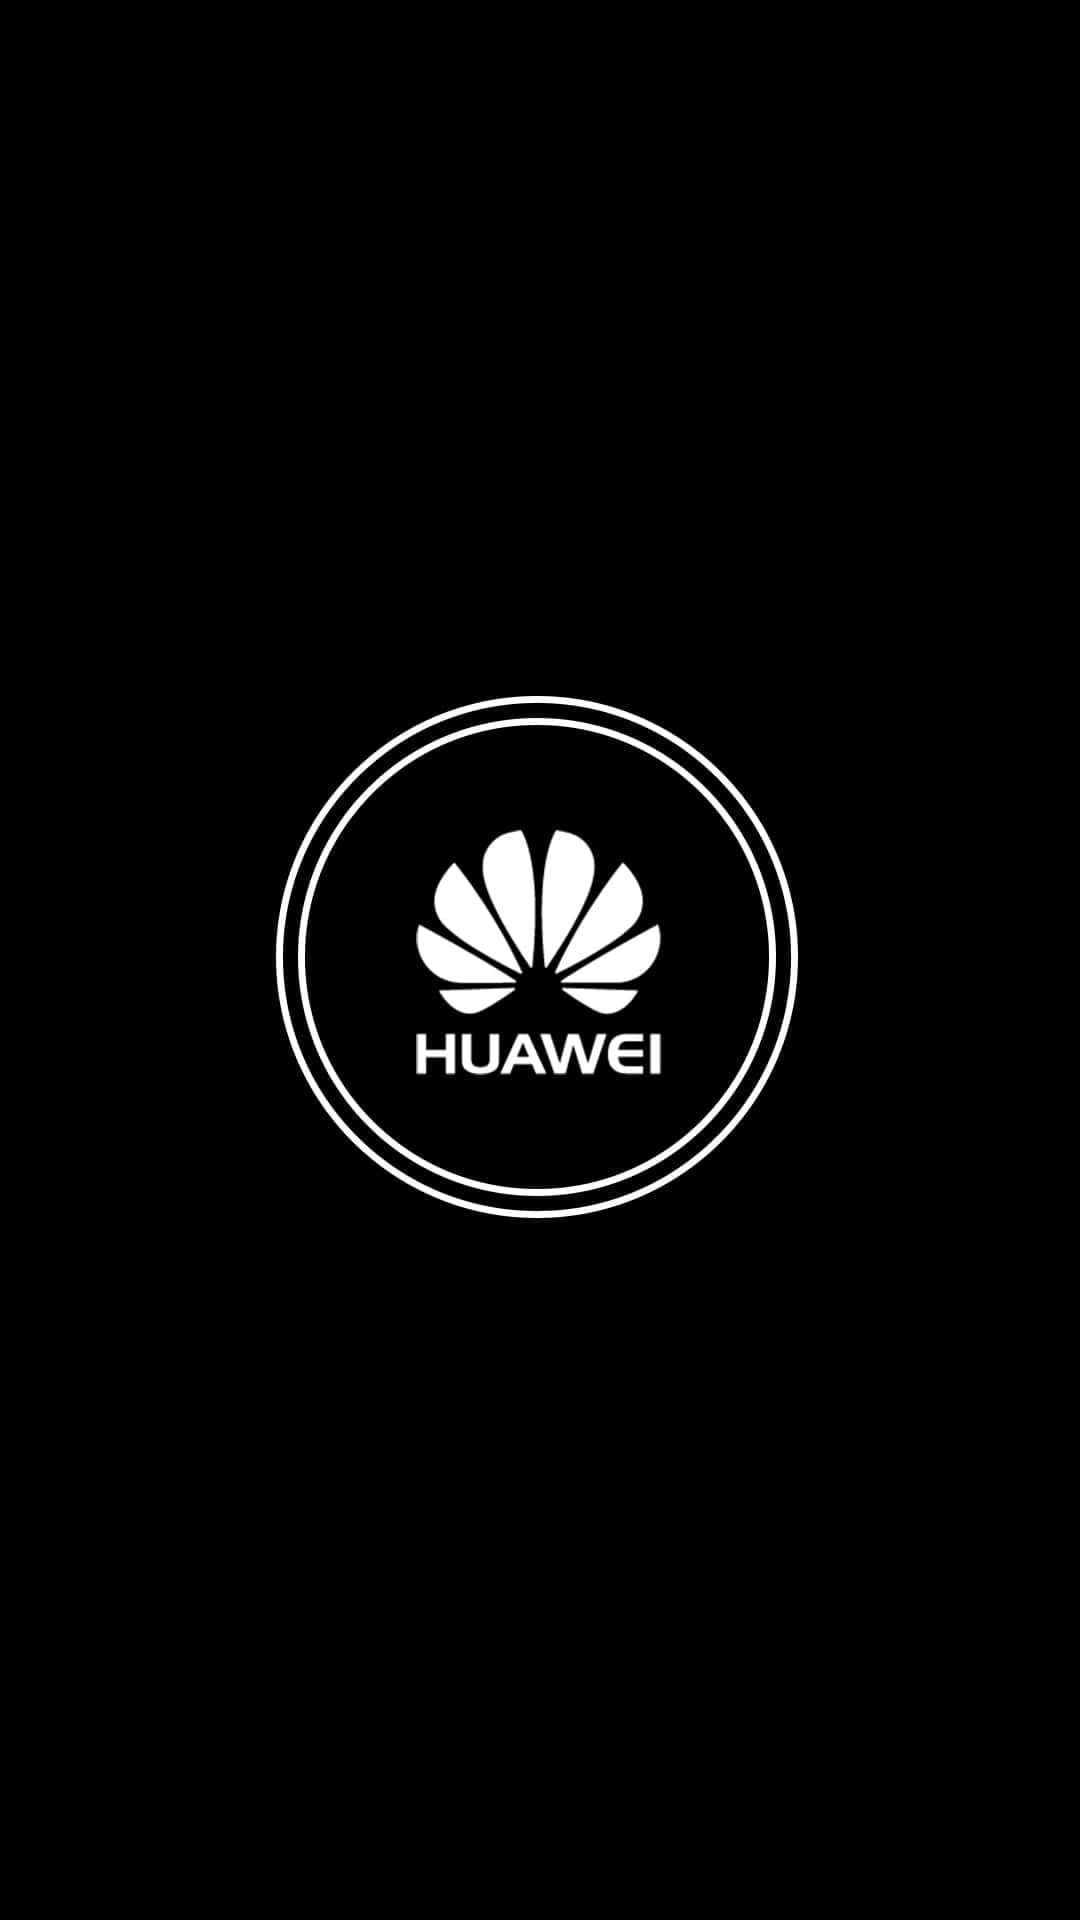 Черный экран huawei. Обои на телефон Huawei. Обои Хуавей черные. Обои для телефона Хуавей, чёрный. Huawei лого.